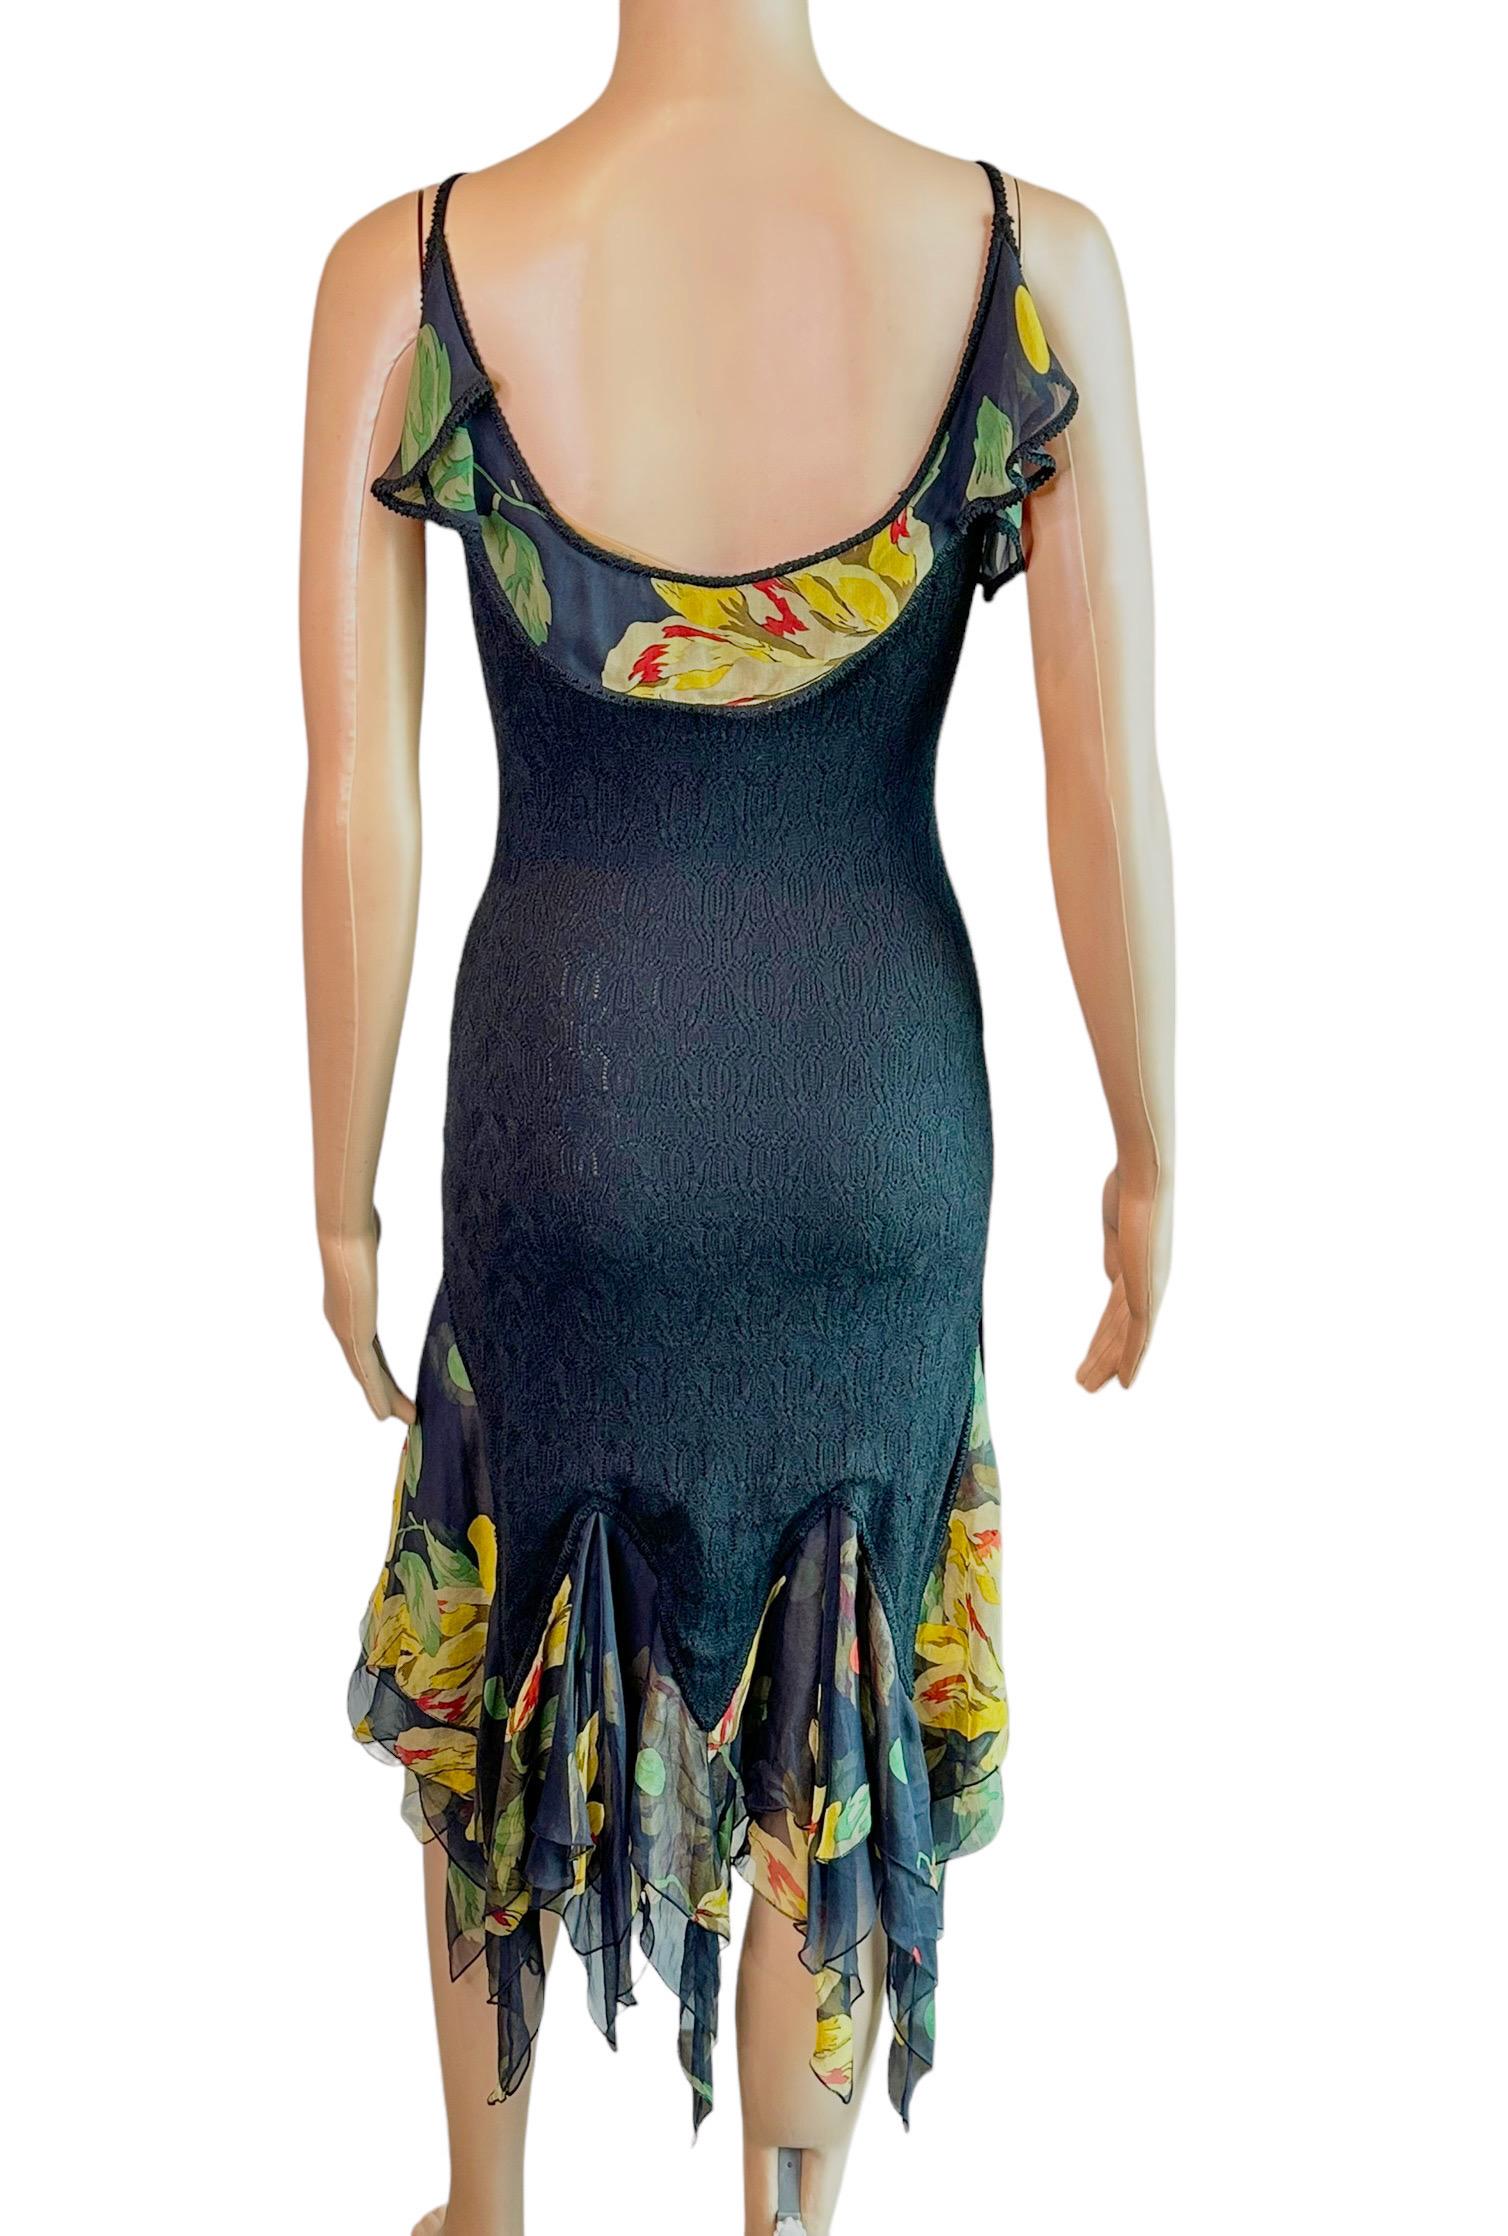 Women's or Men's John Galliano S/S 2004 Sheer Lace Open Knit Floral Print Silk Ruffles Midi Dress For Sale